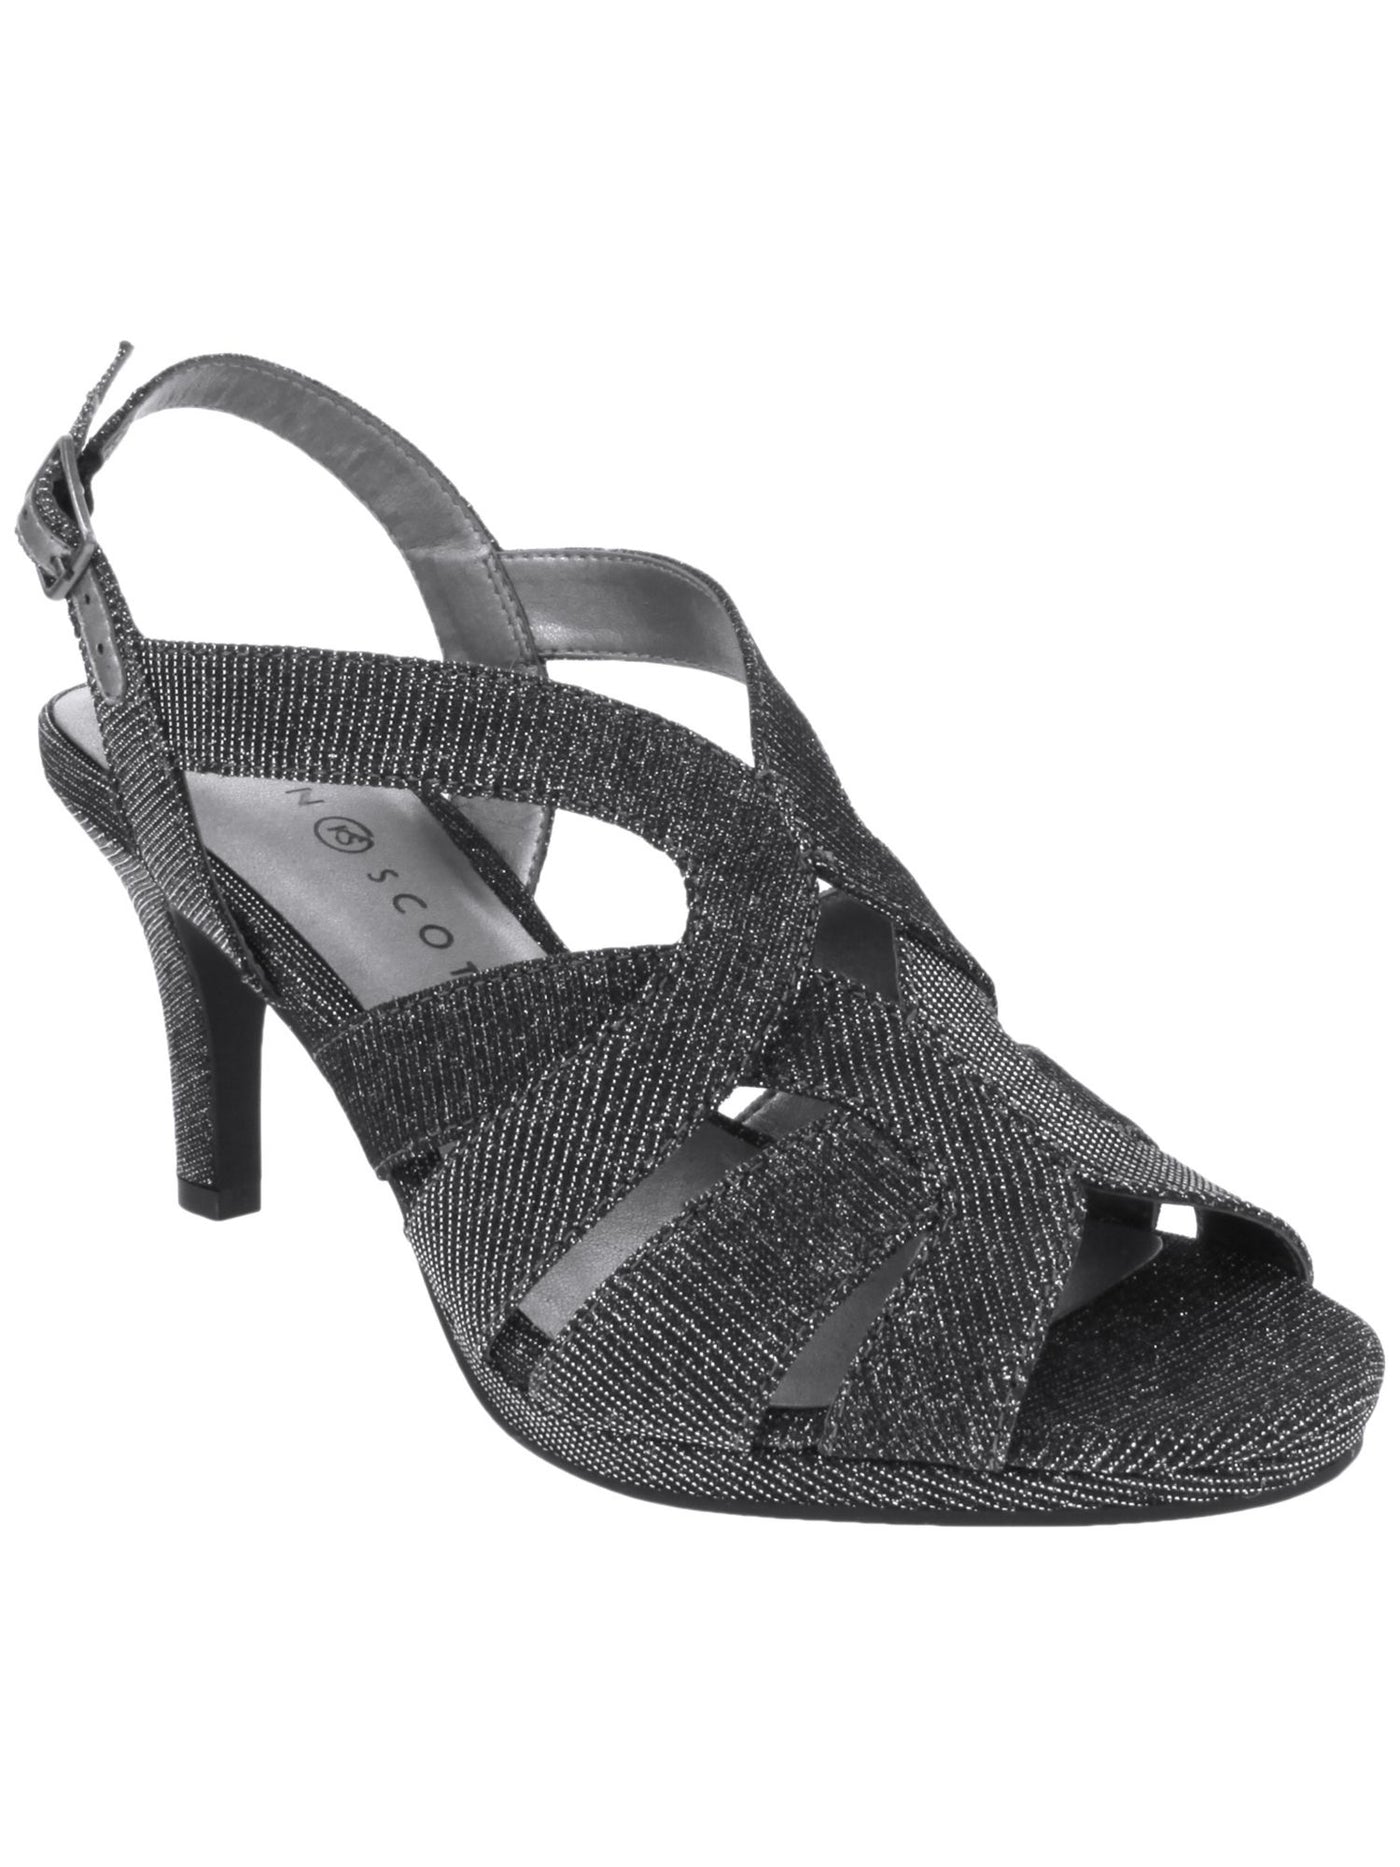 KAREN SCOTT Womens Gray Glitter Cushioned Belindah Peep Toe Stiletto Buckle Dress Sandals Shoes 8 M